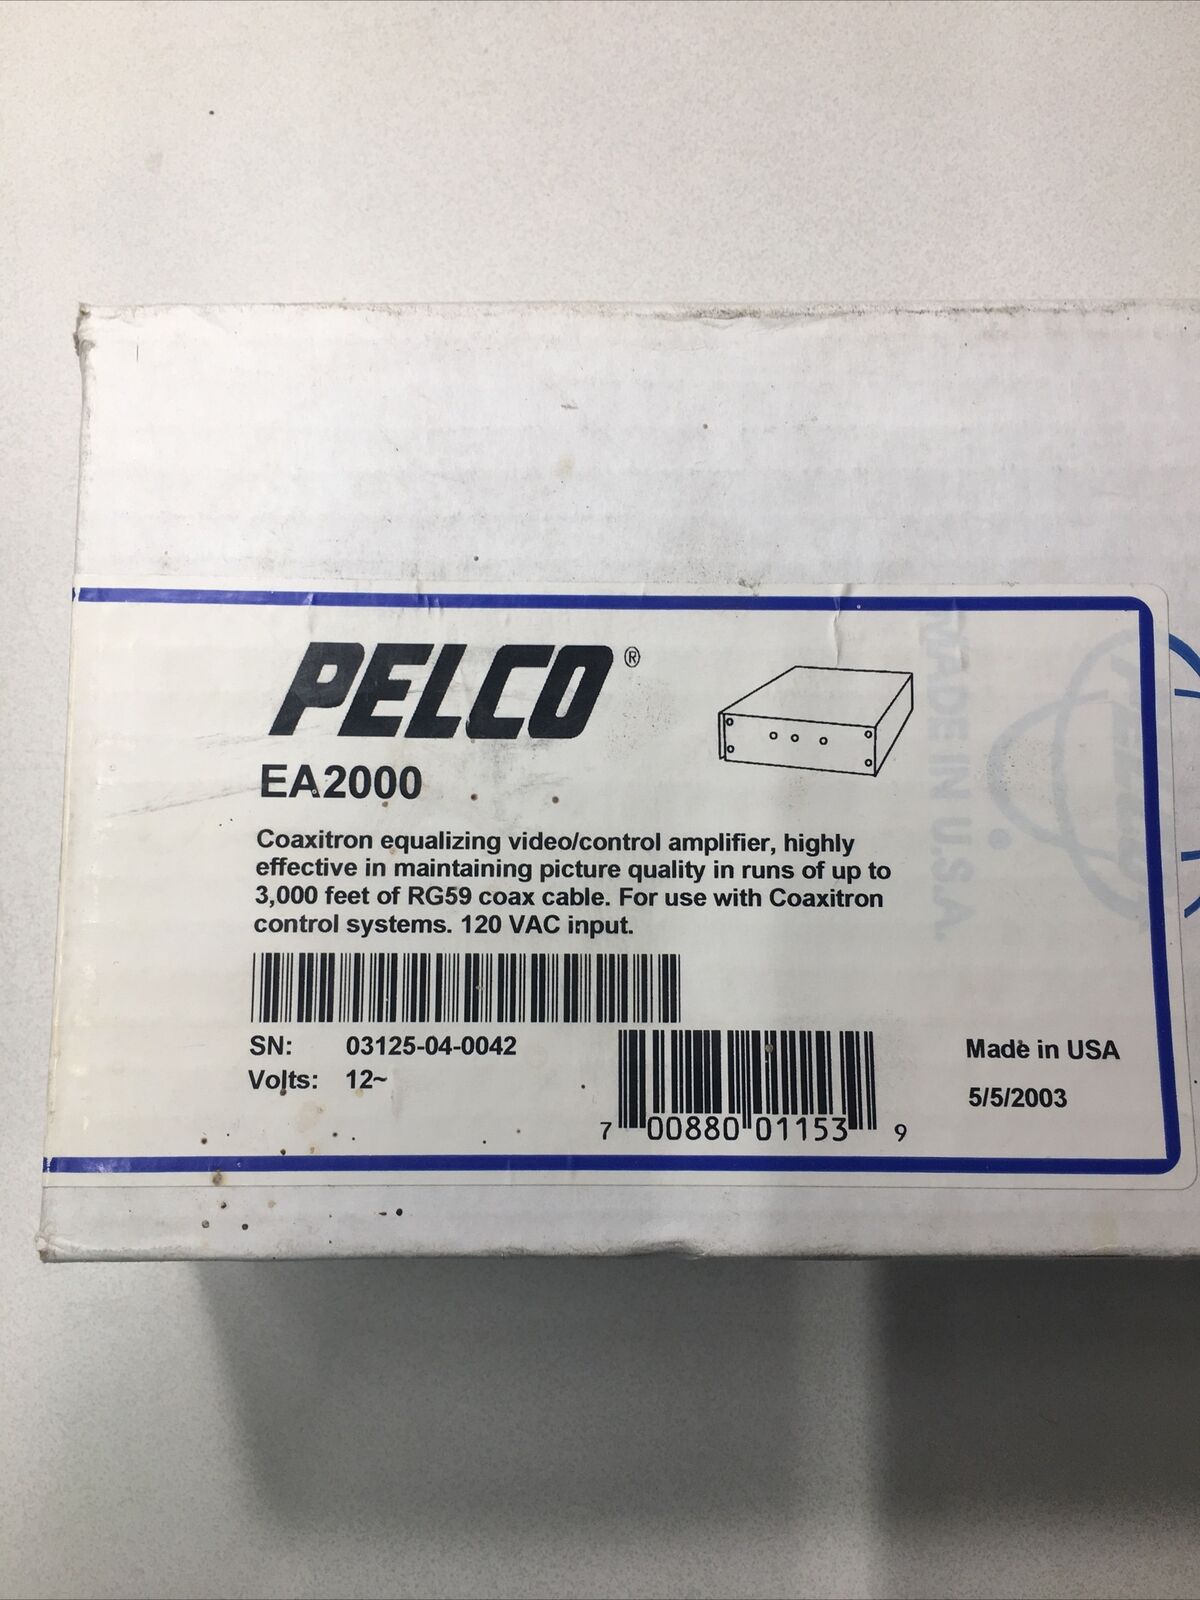 Pelco EA2000 Coaxitron Equalizing Video/Control Amplifier